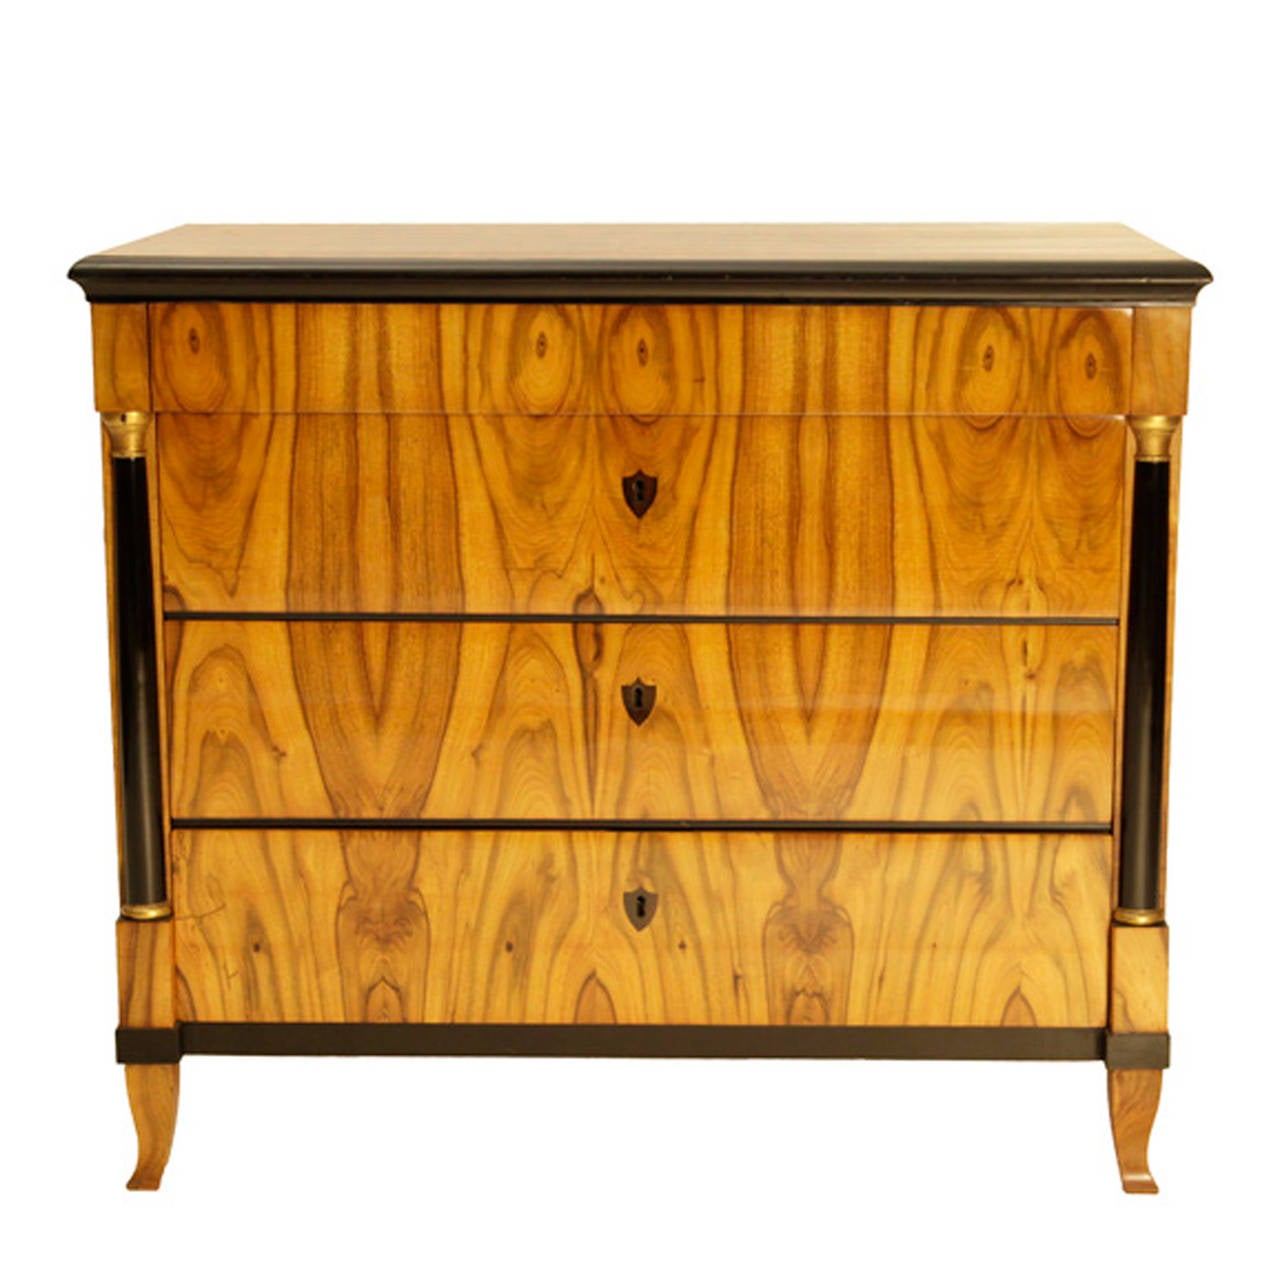 Exquisite Franconia Biedermeier chest of drawers, 1820s.
Walnut veneer with ebonized columns.